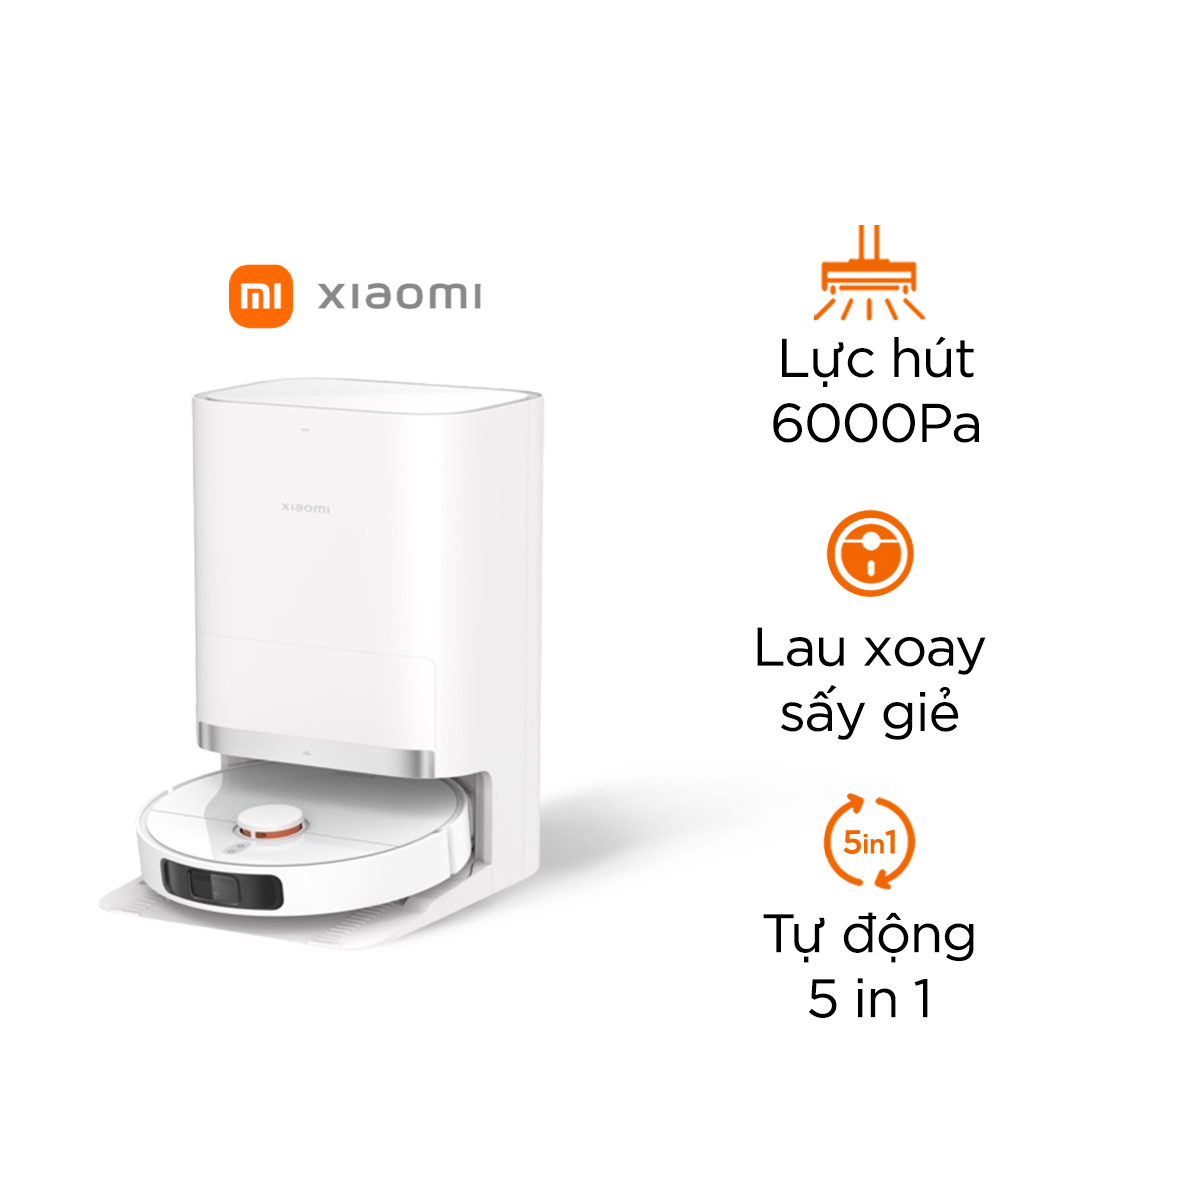 Robot hút bụi lau nhà Xiaomi Vacuum X20+ (X20 Plus)